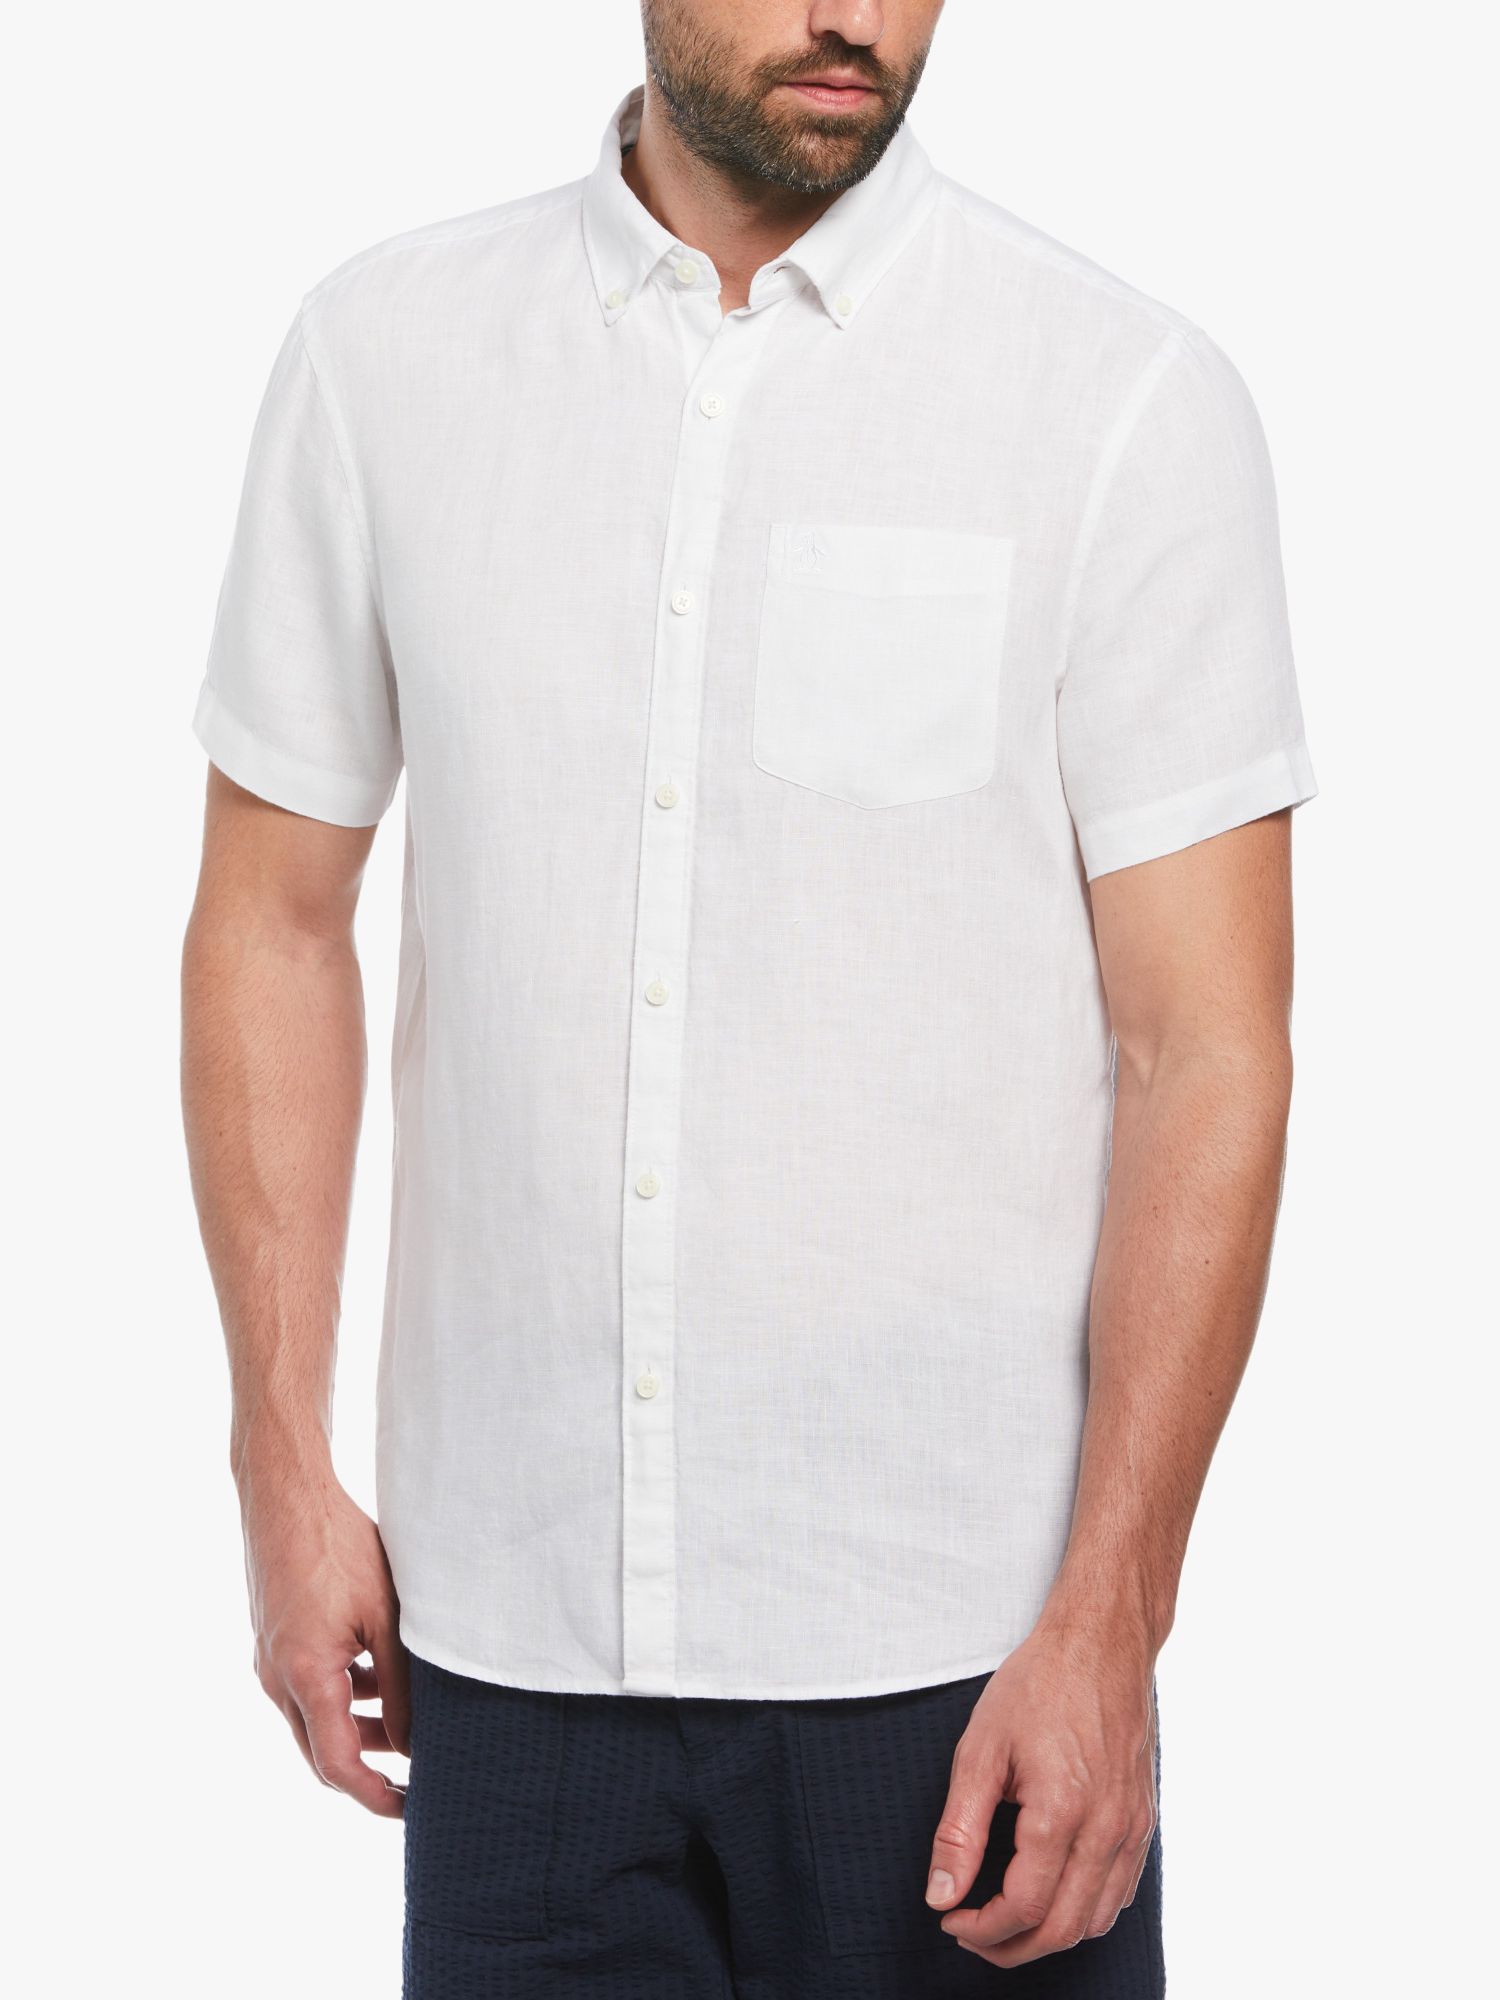 Original Penguin Short Sleeve Linen Shirt, White, XL